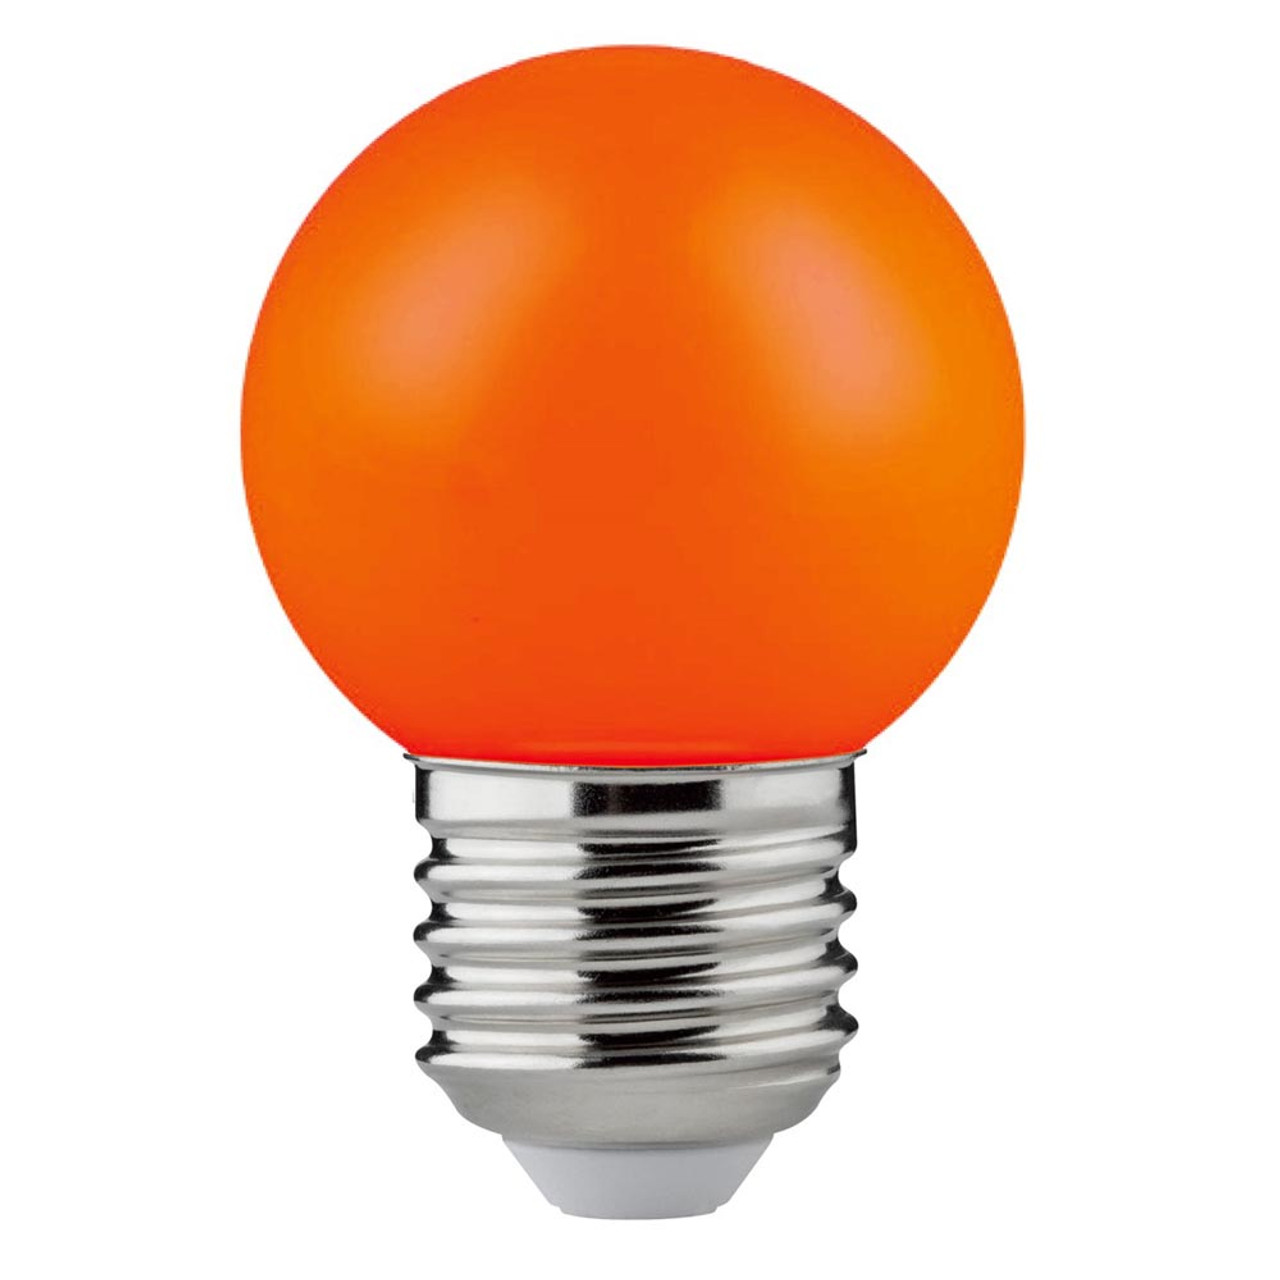 Sylvania ToLEDo LED 45mm Golf Ball 1W E27 Orange